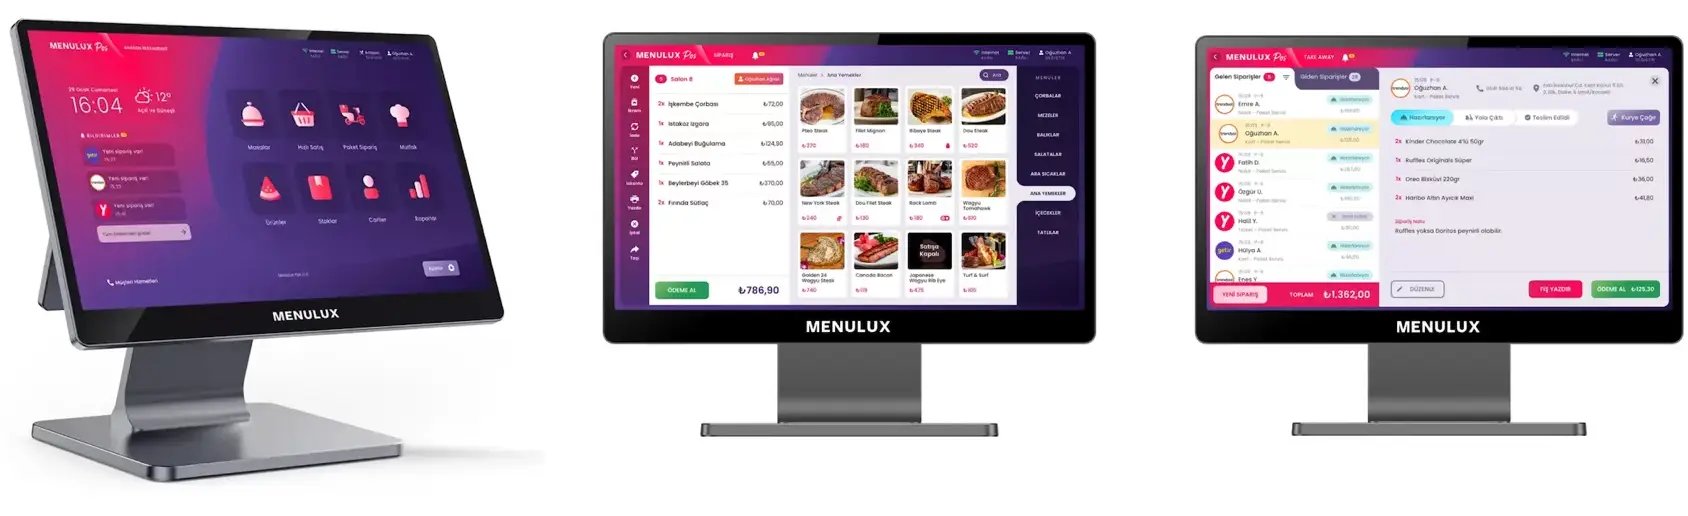 Menulux POS Systems - Restaurant Addition Program - Blog